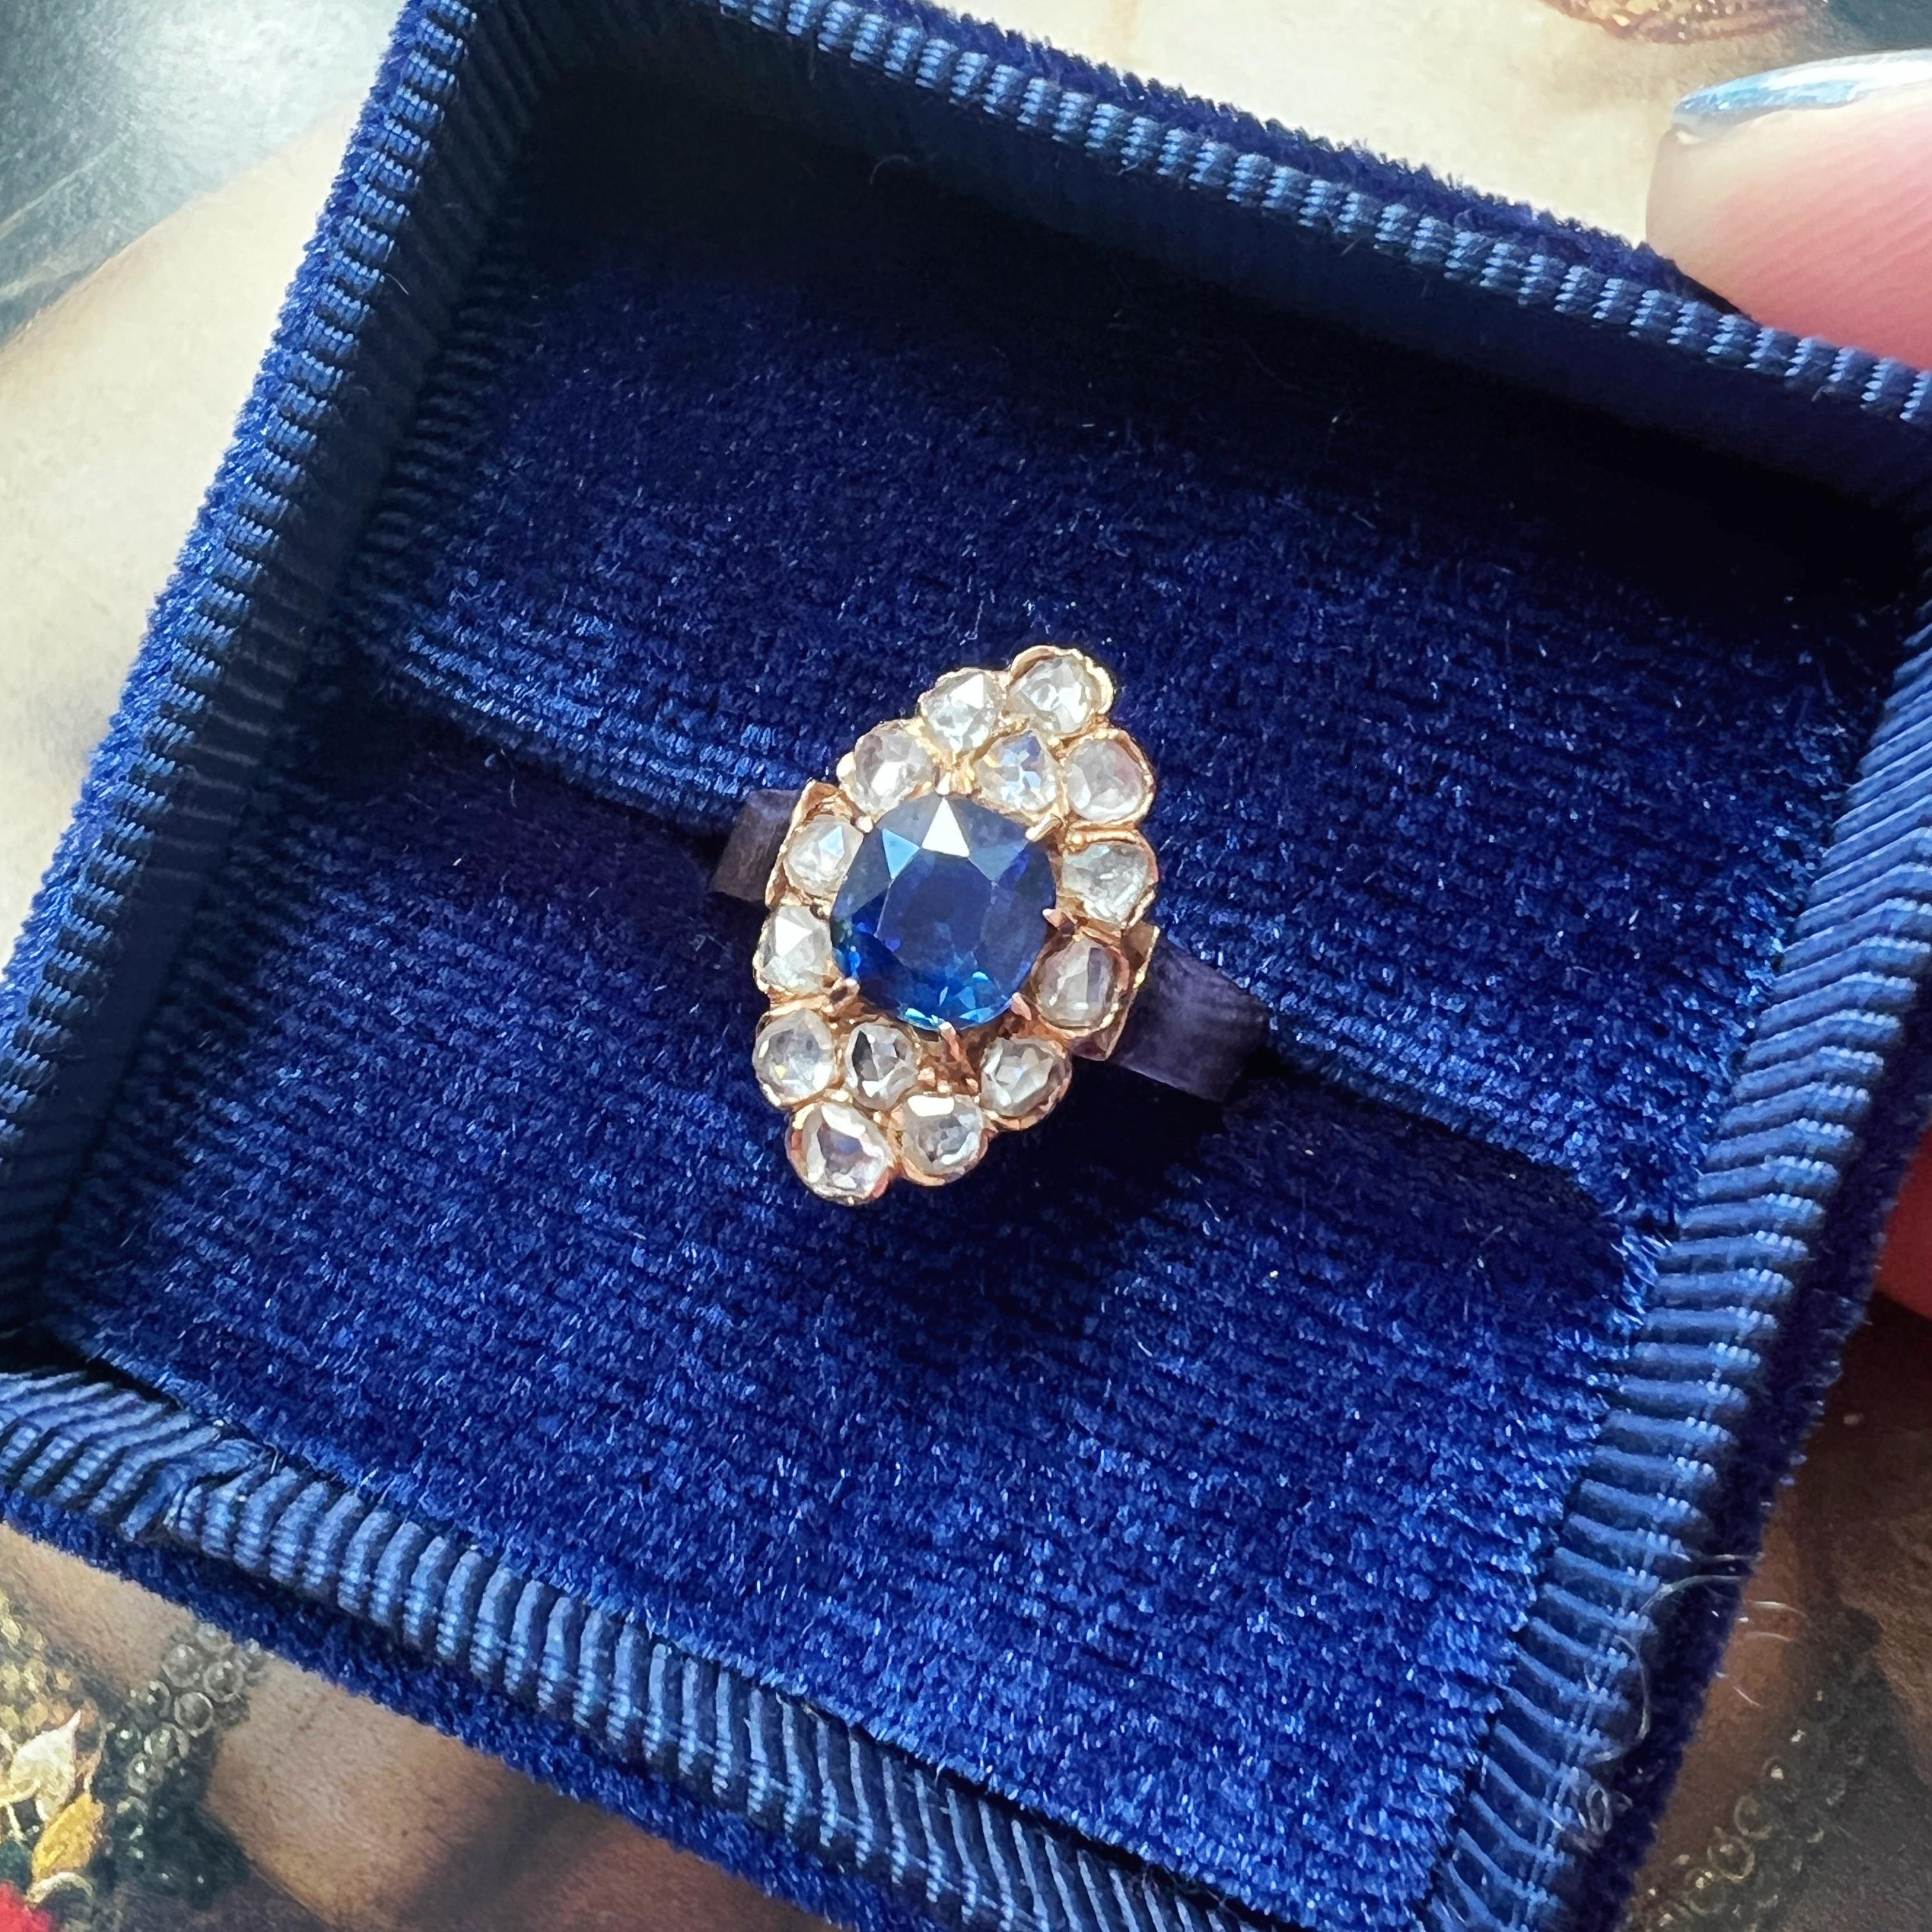 Antique Cushion Cut Antique certified natural unheated blue sapphire diamond ring